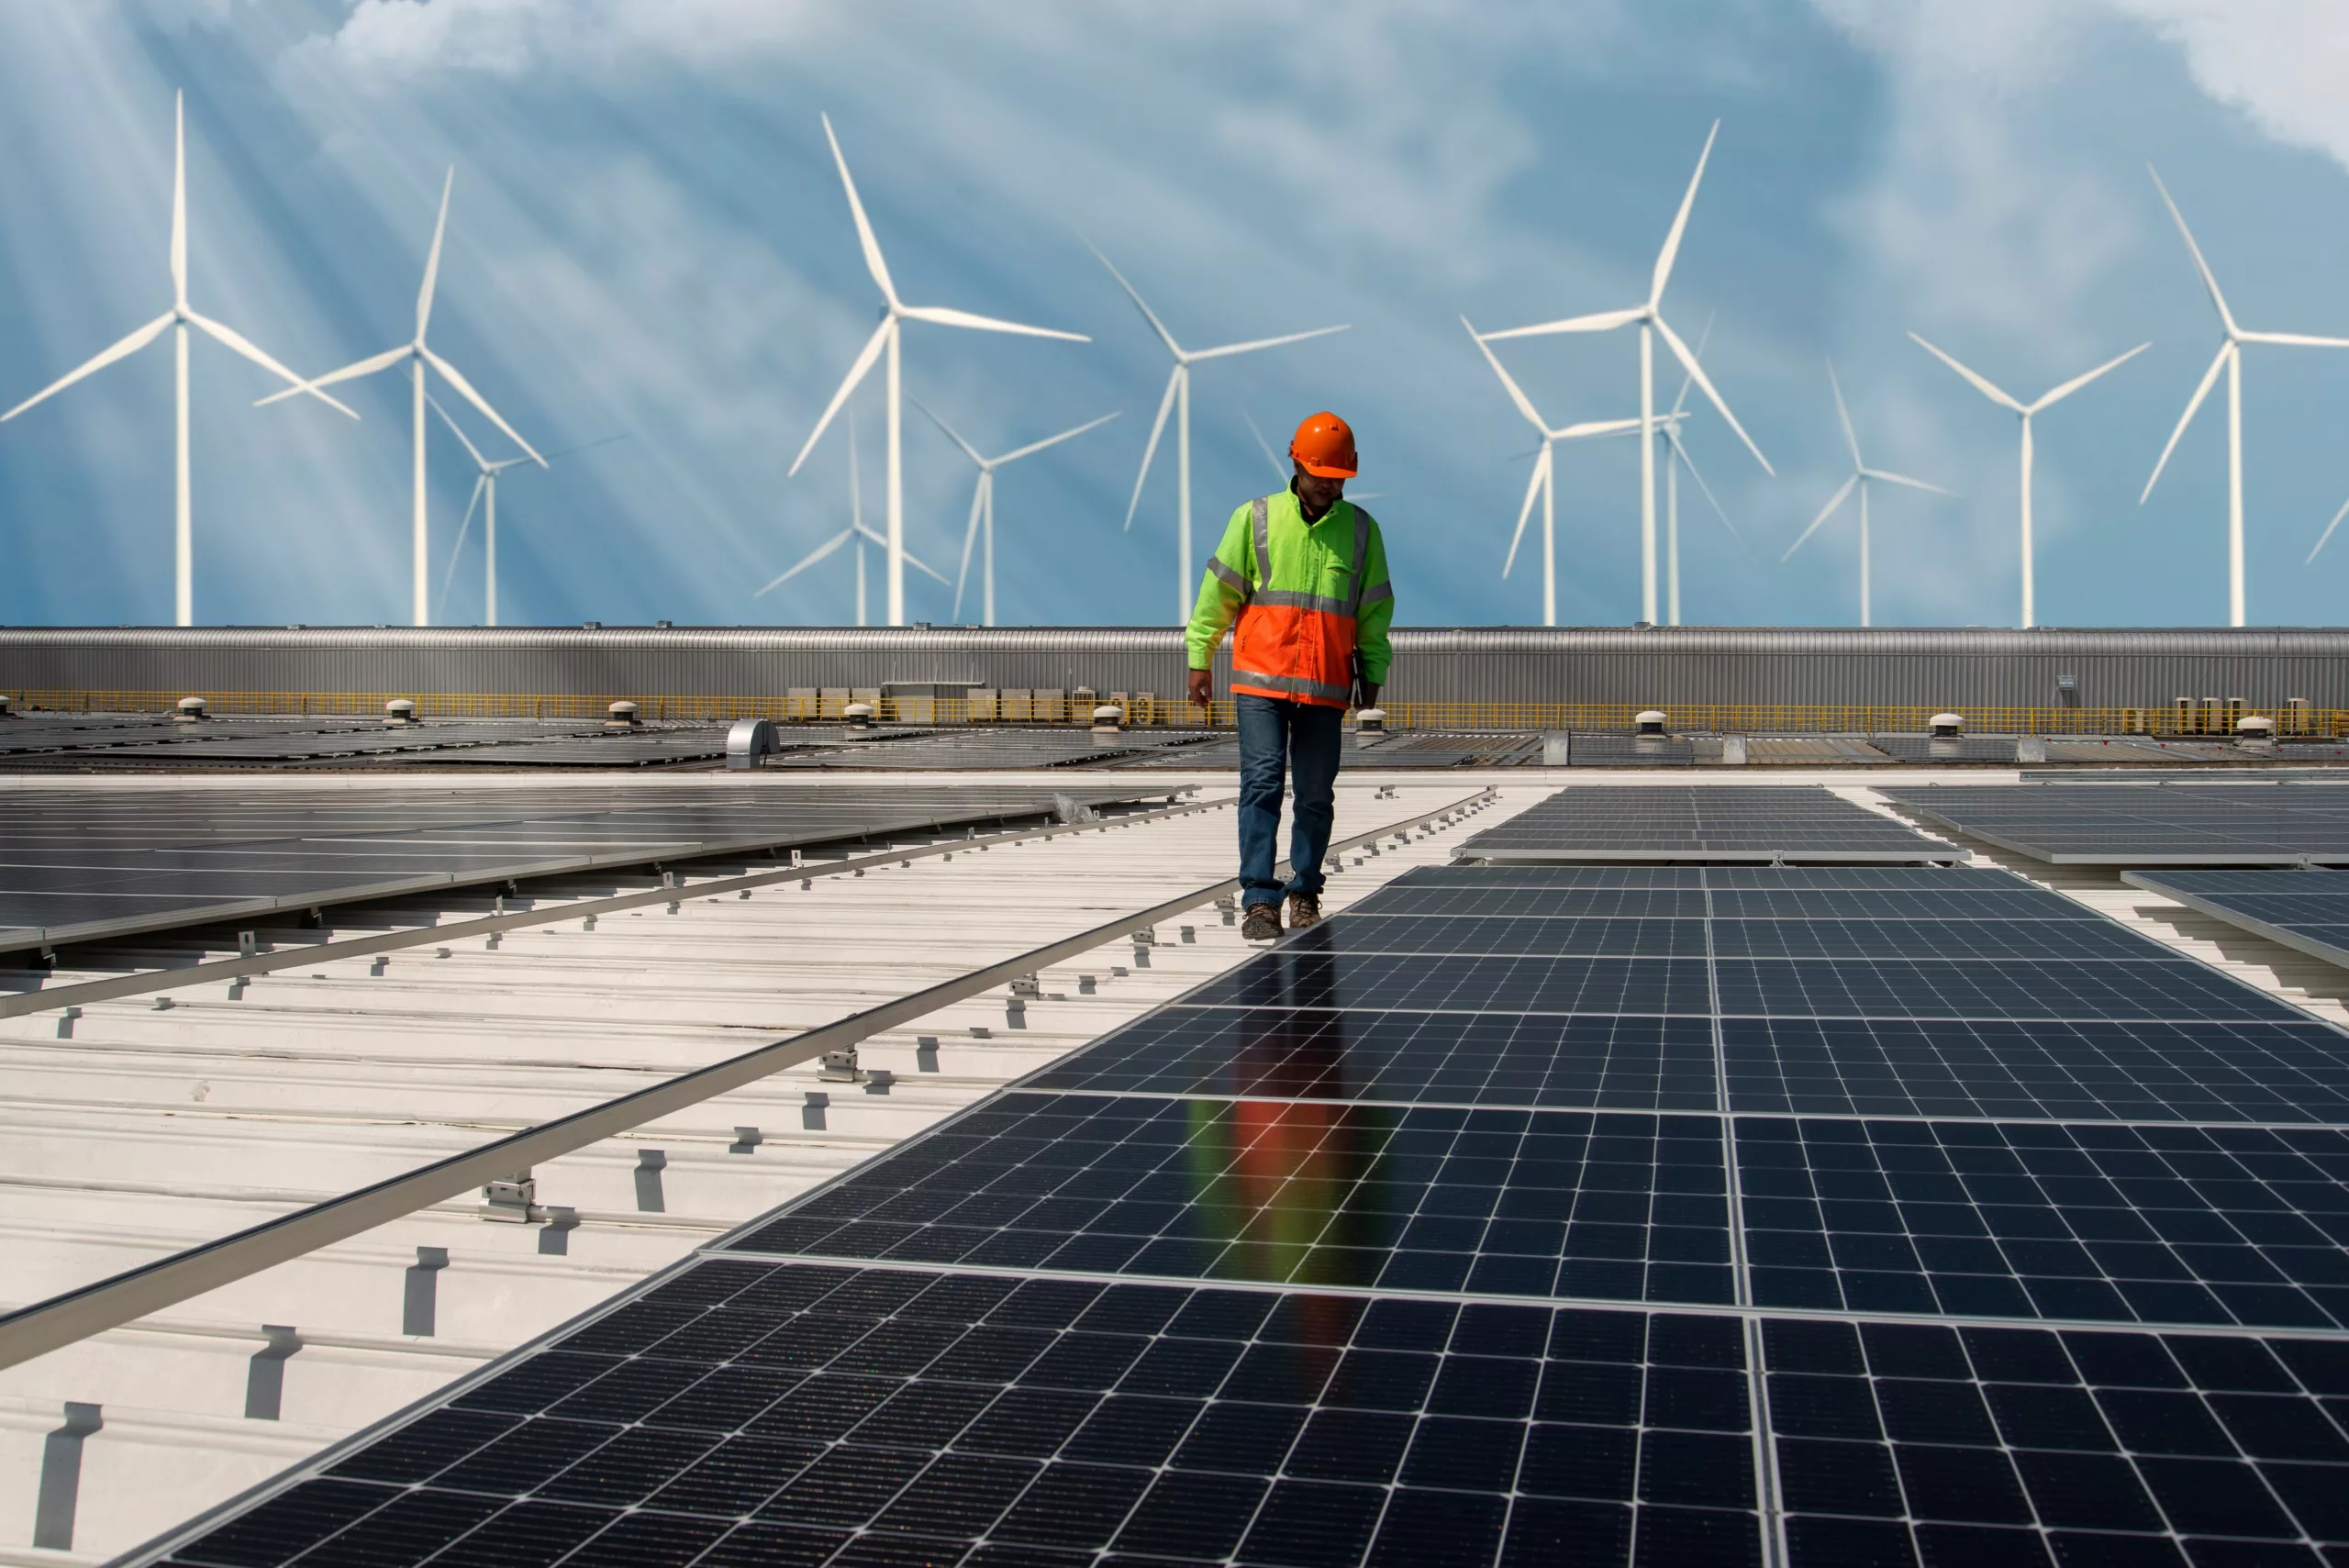 Male worker walking amongst solar panels and wind turbines